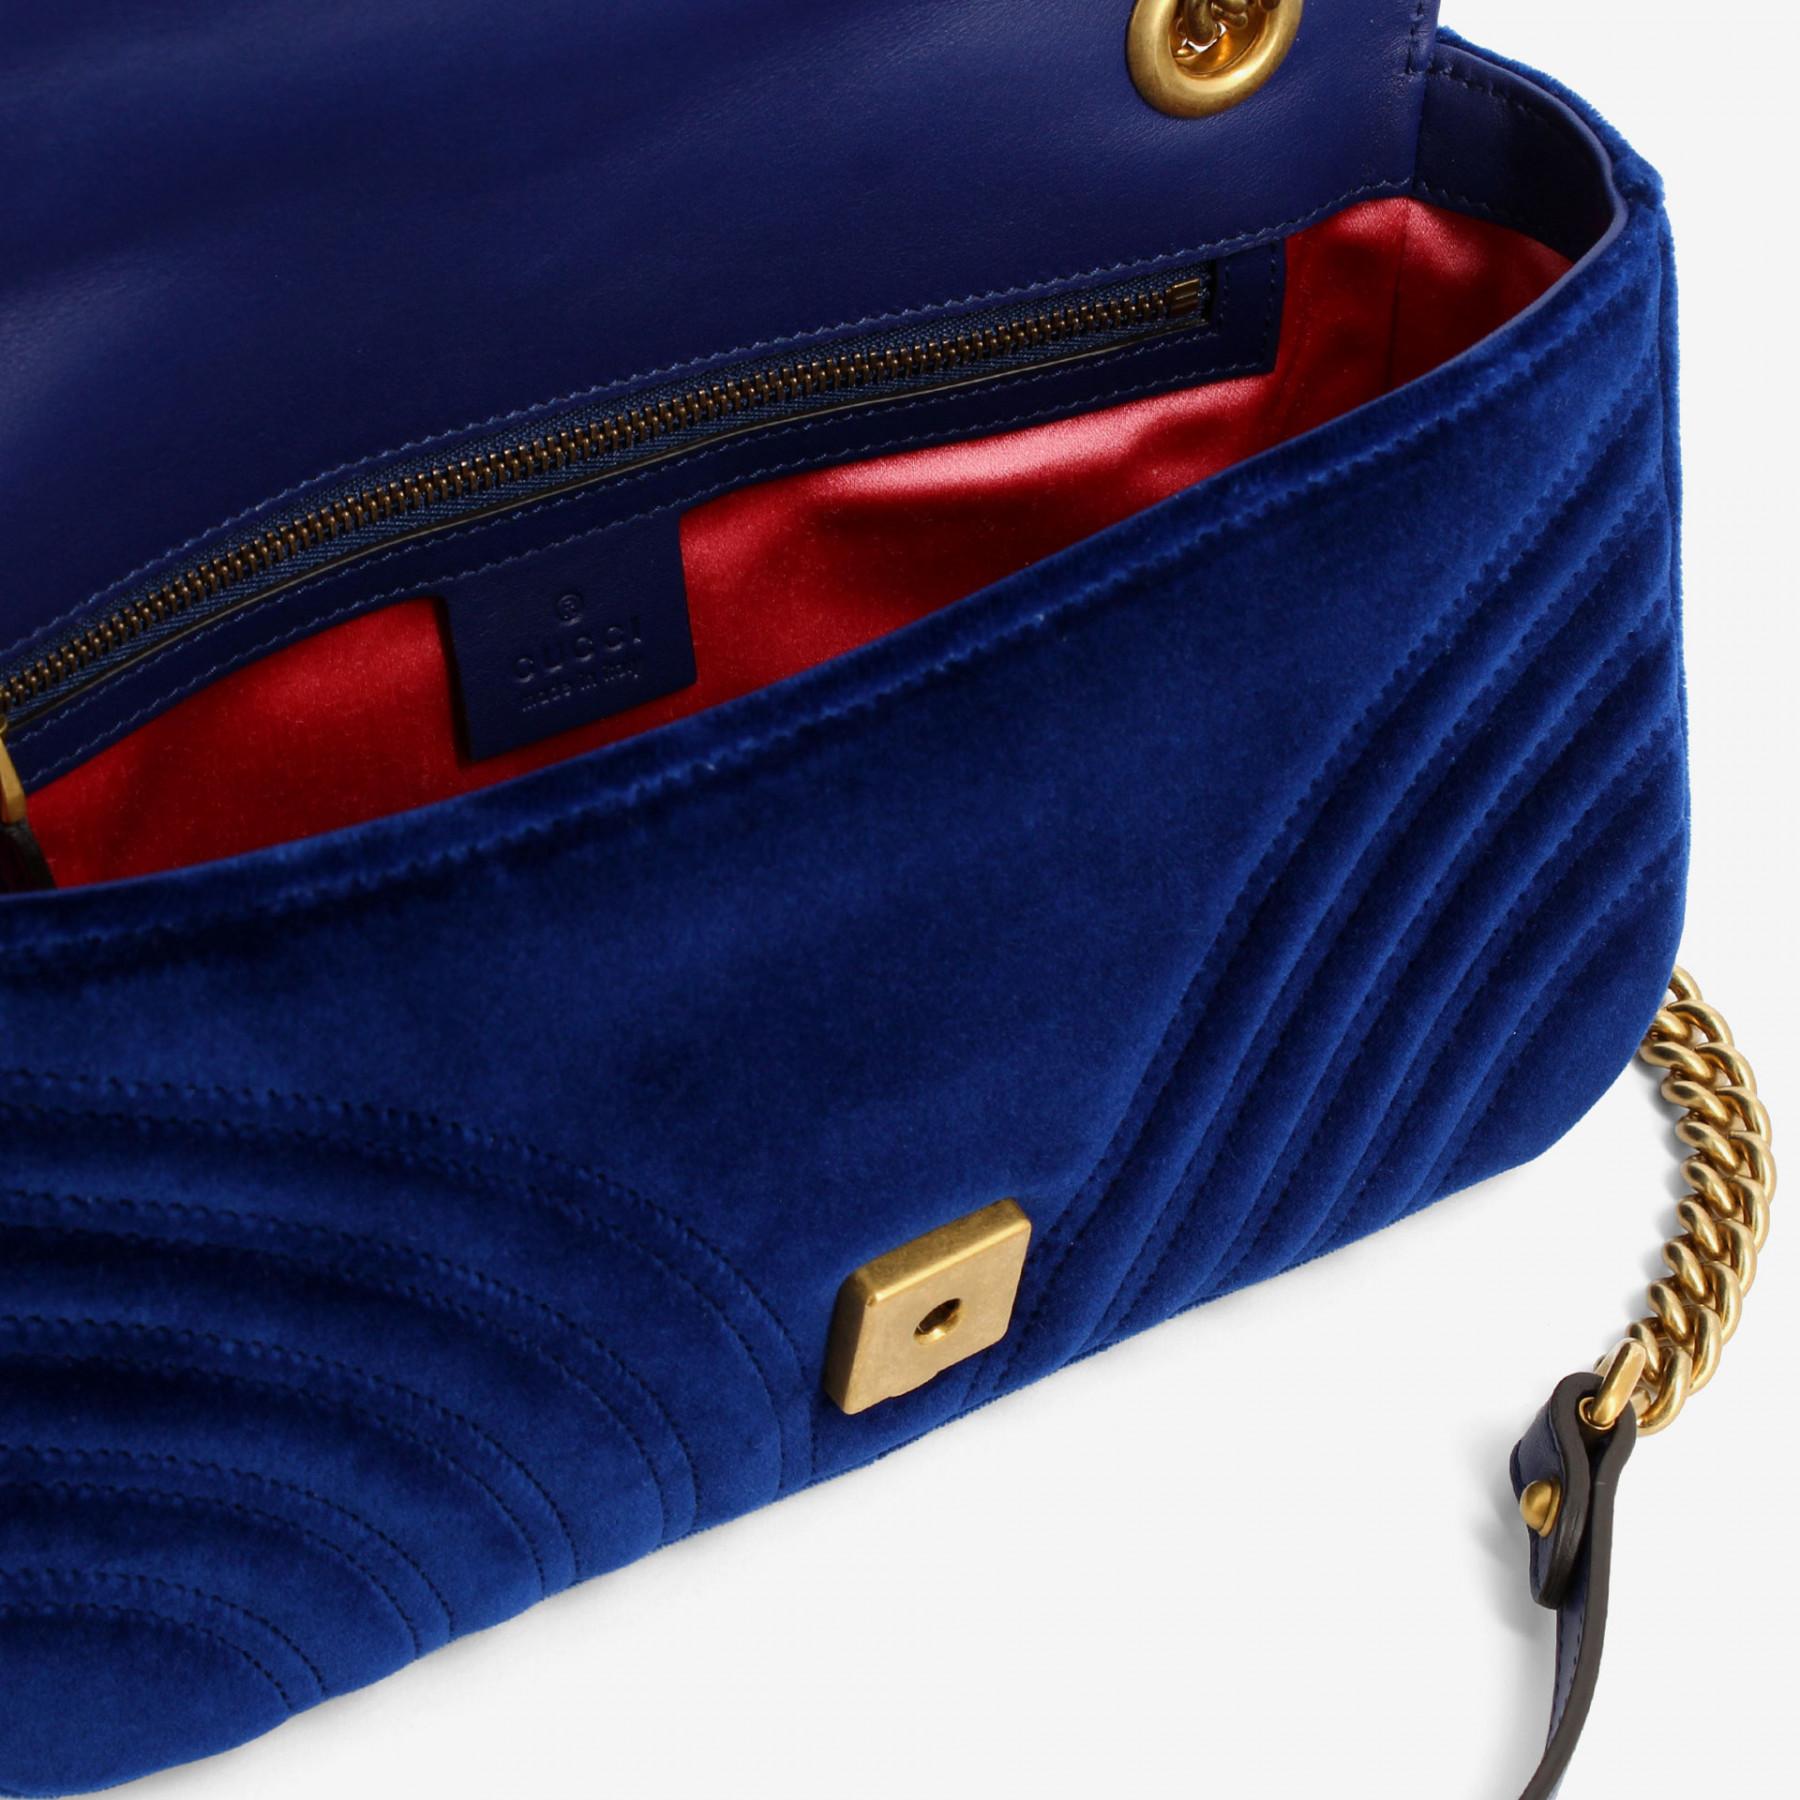 Lyst - Gucci Gg Marmont Velvet Bag in Blue